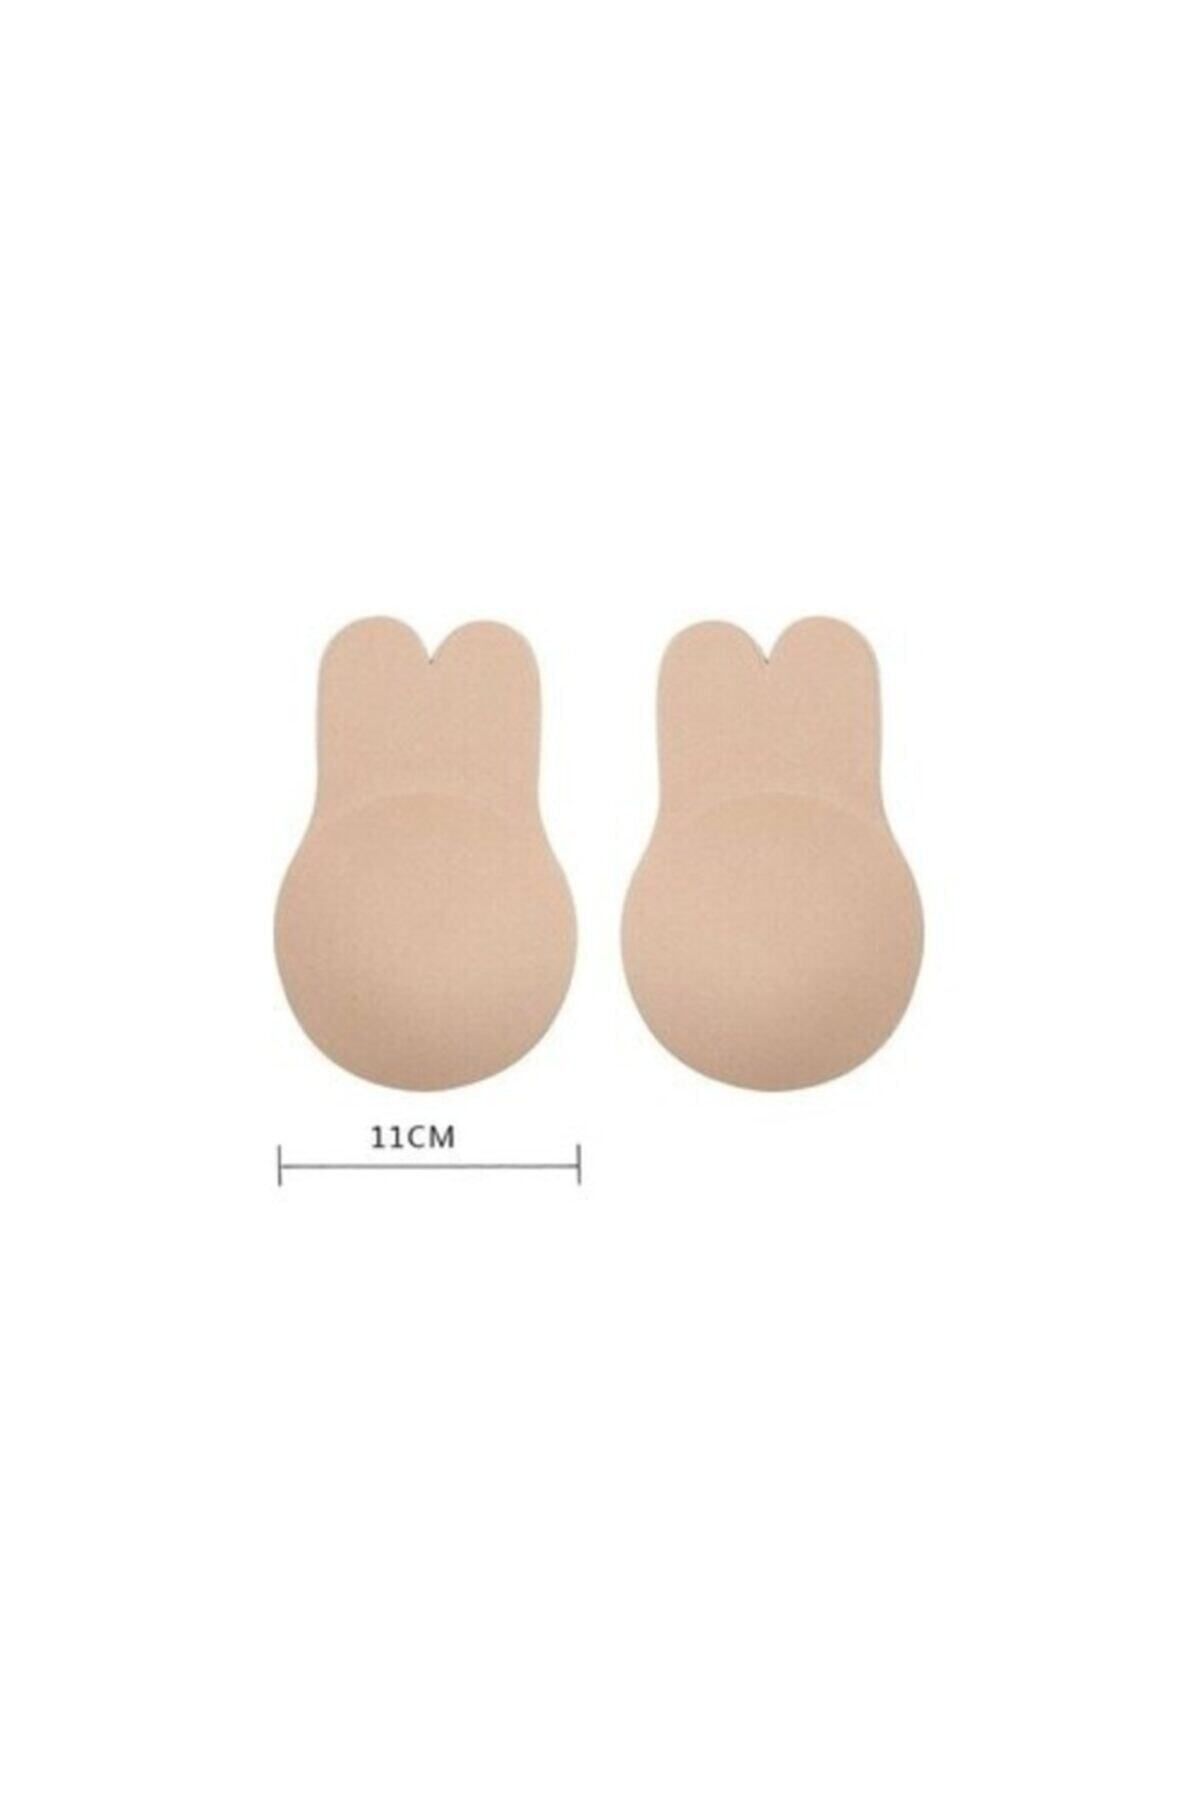 BOGDA Breast Lifter, Nipple Concealer Adhesive Strapless Bra Skin Color -  Trendyol